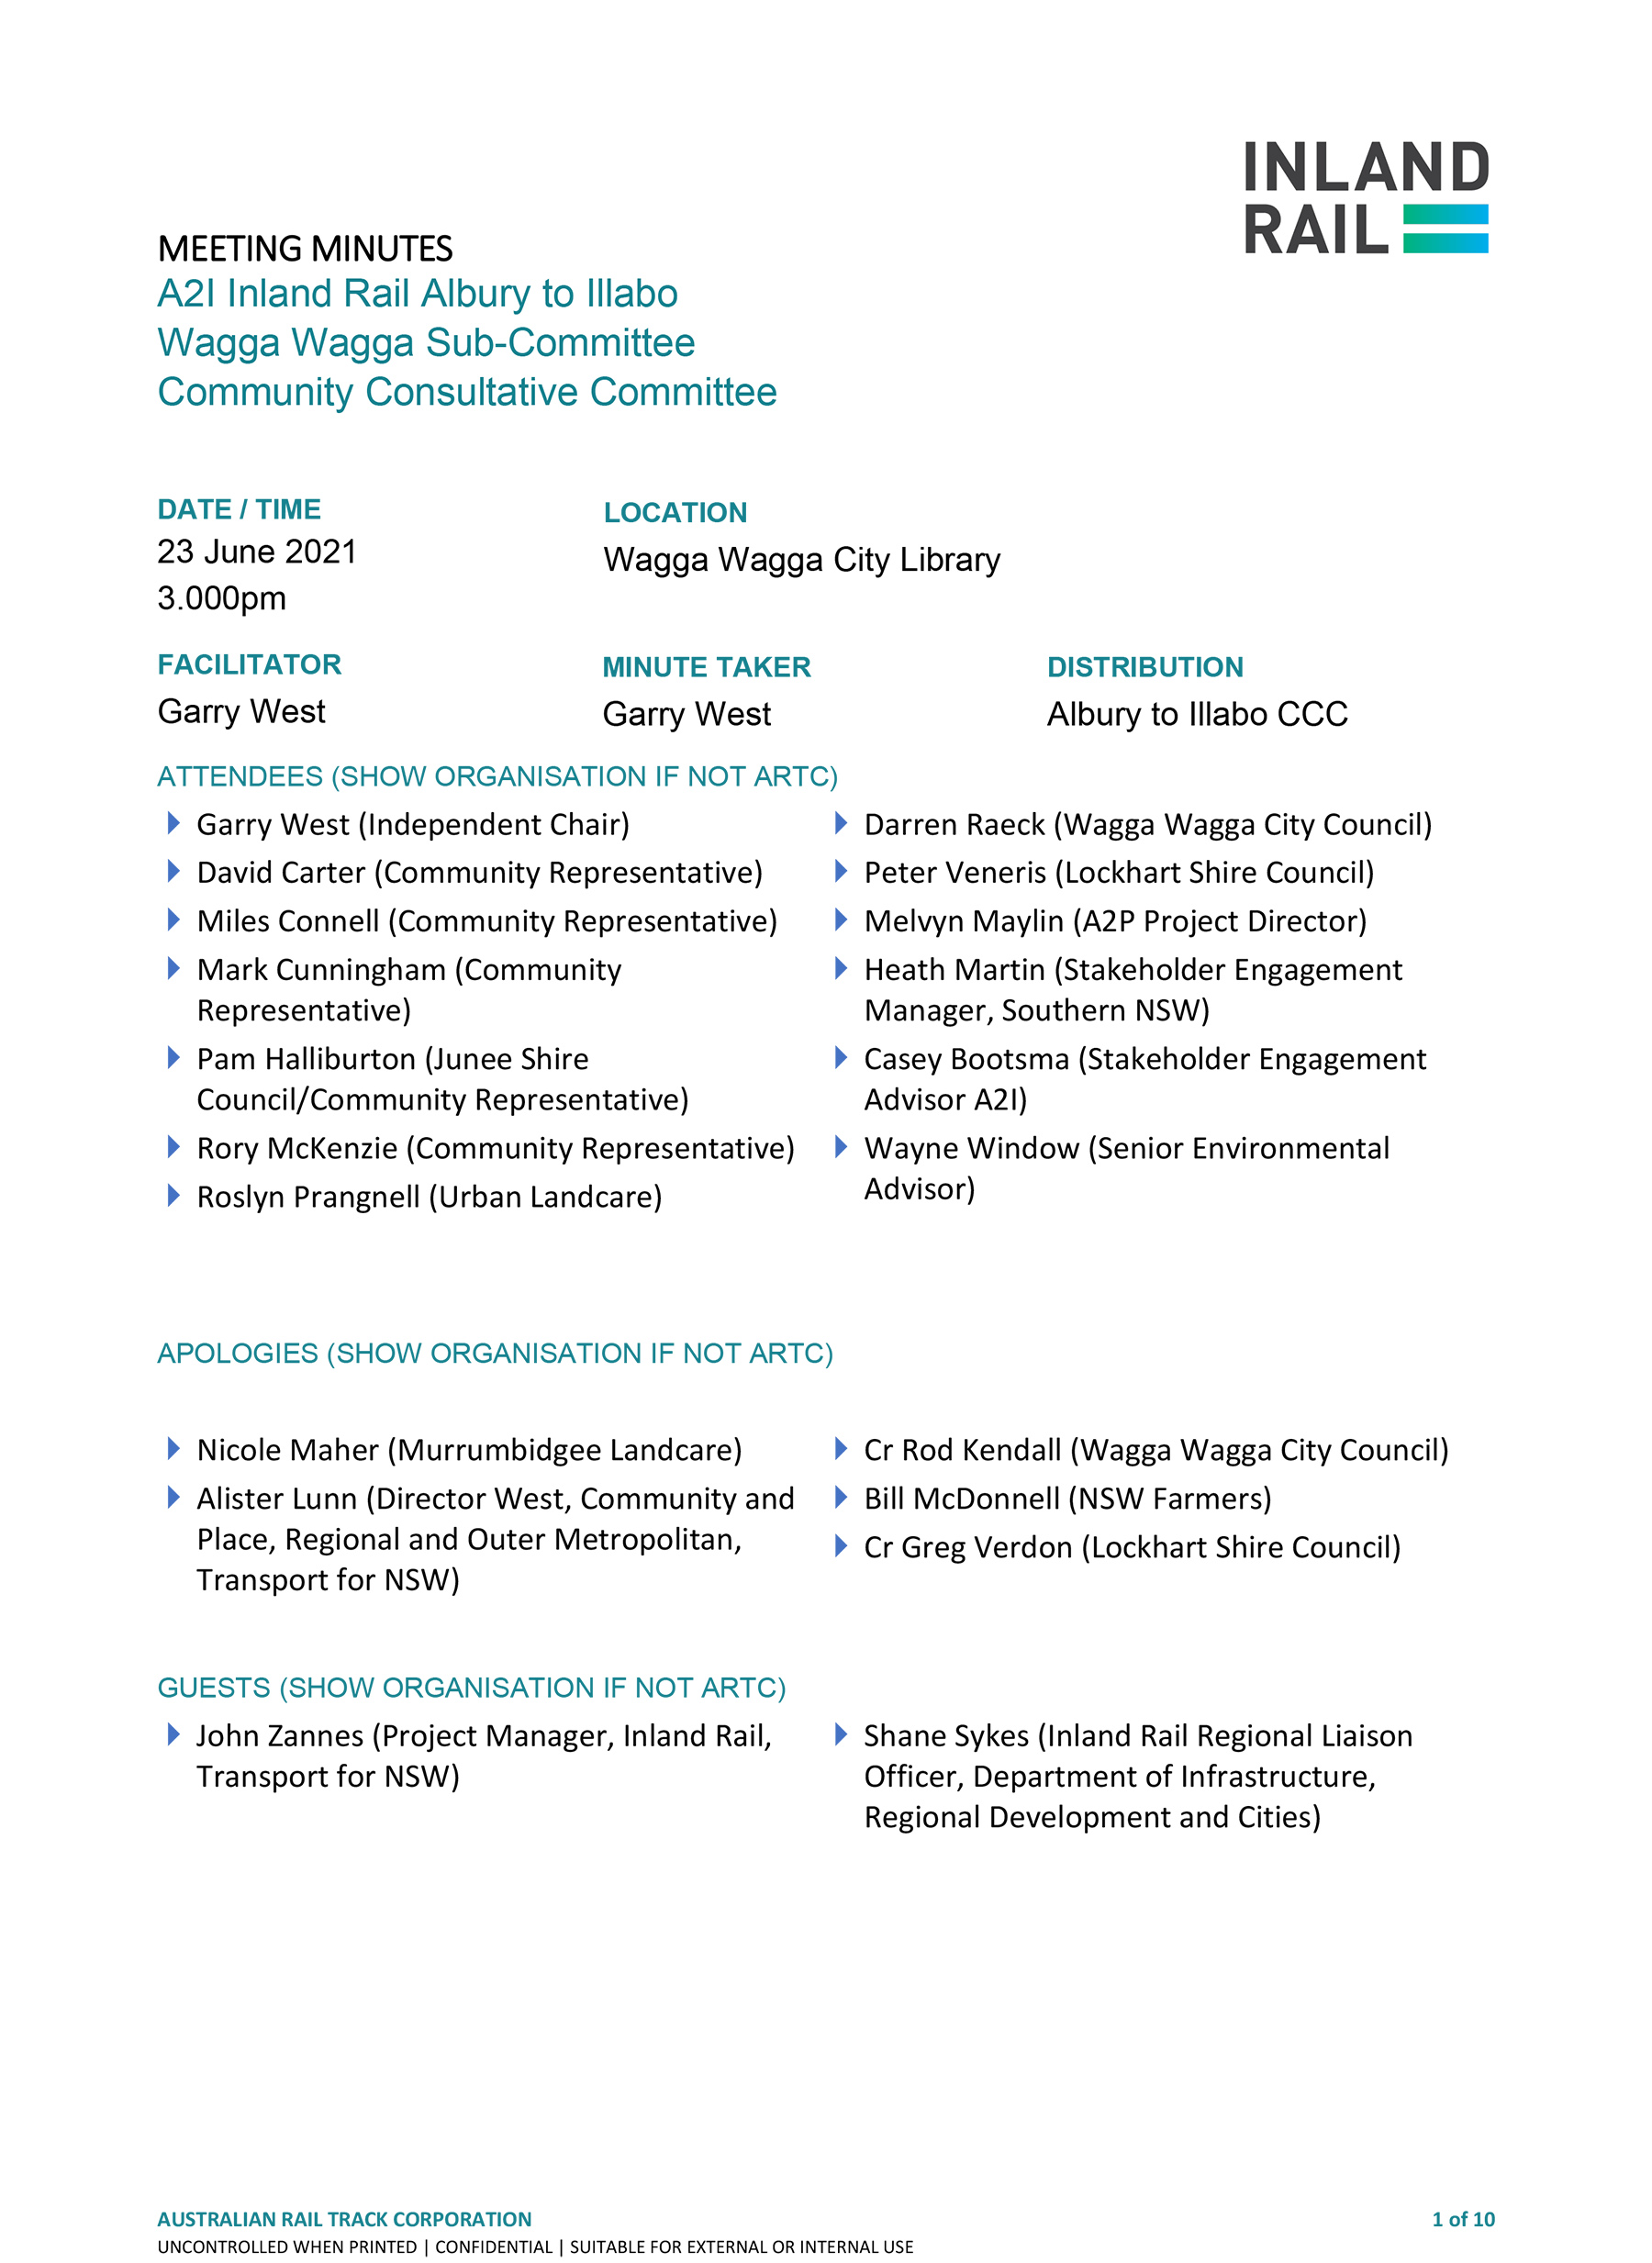 albury-to-illabo-wagga-wagga-sub-committee-CCC-meeting-minutes-23-june-2021